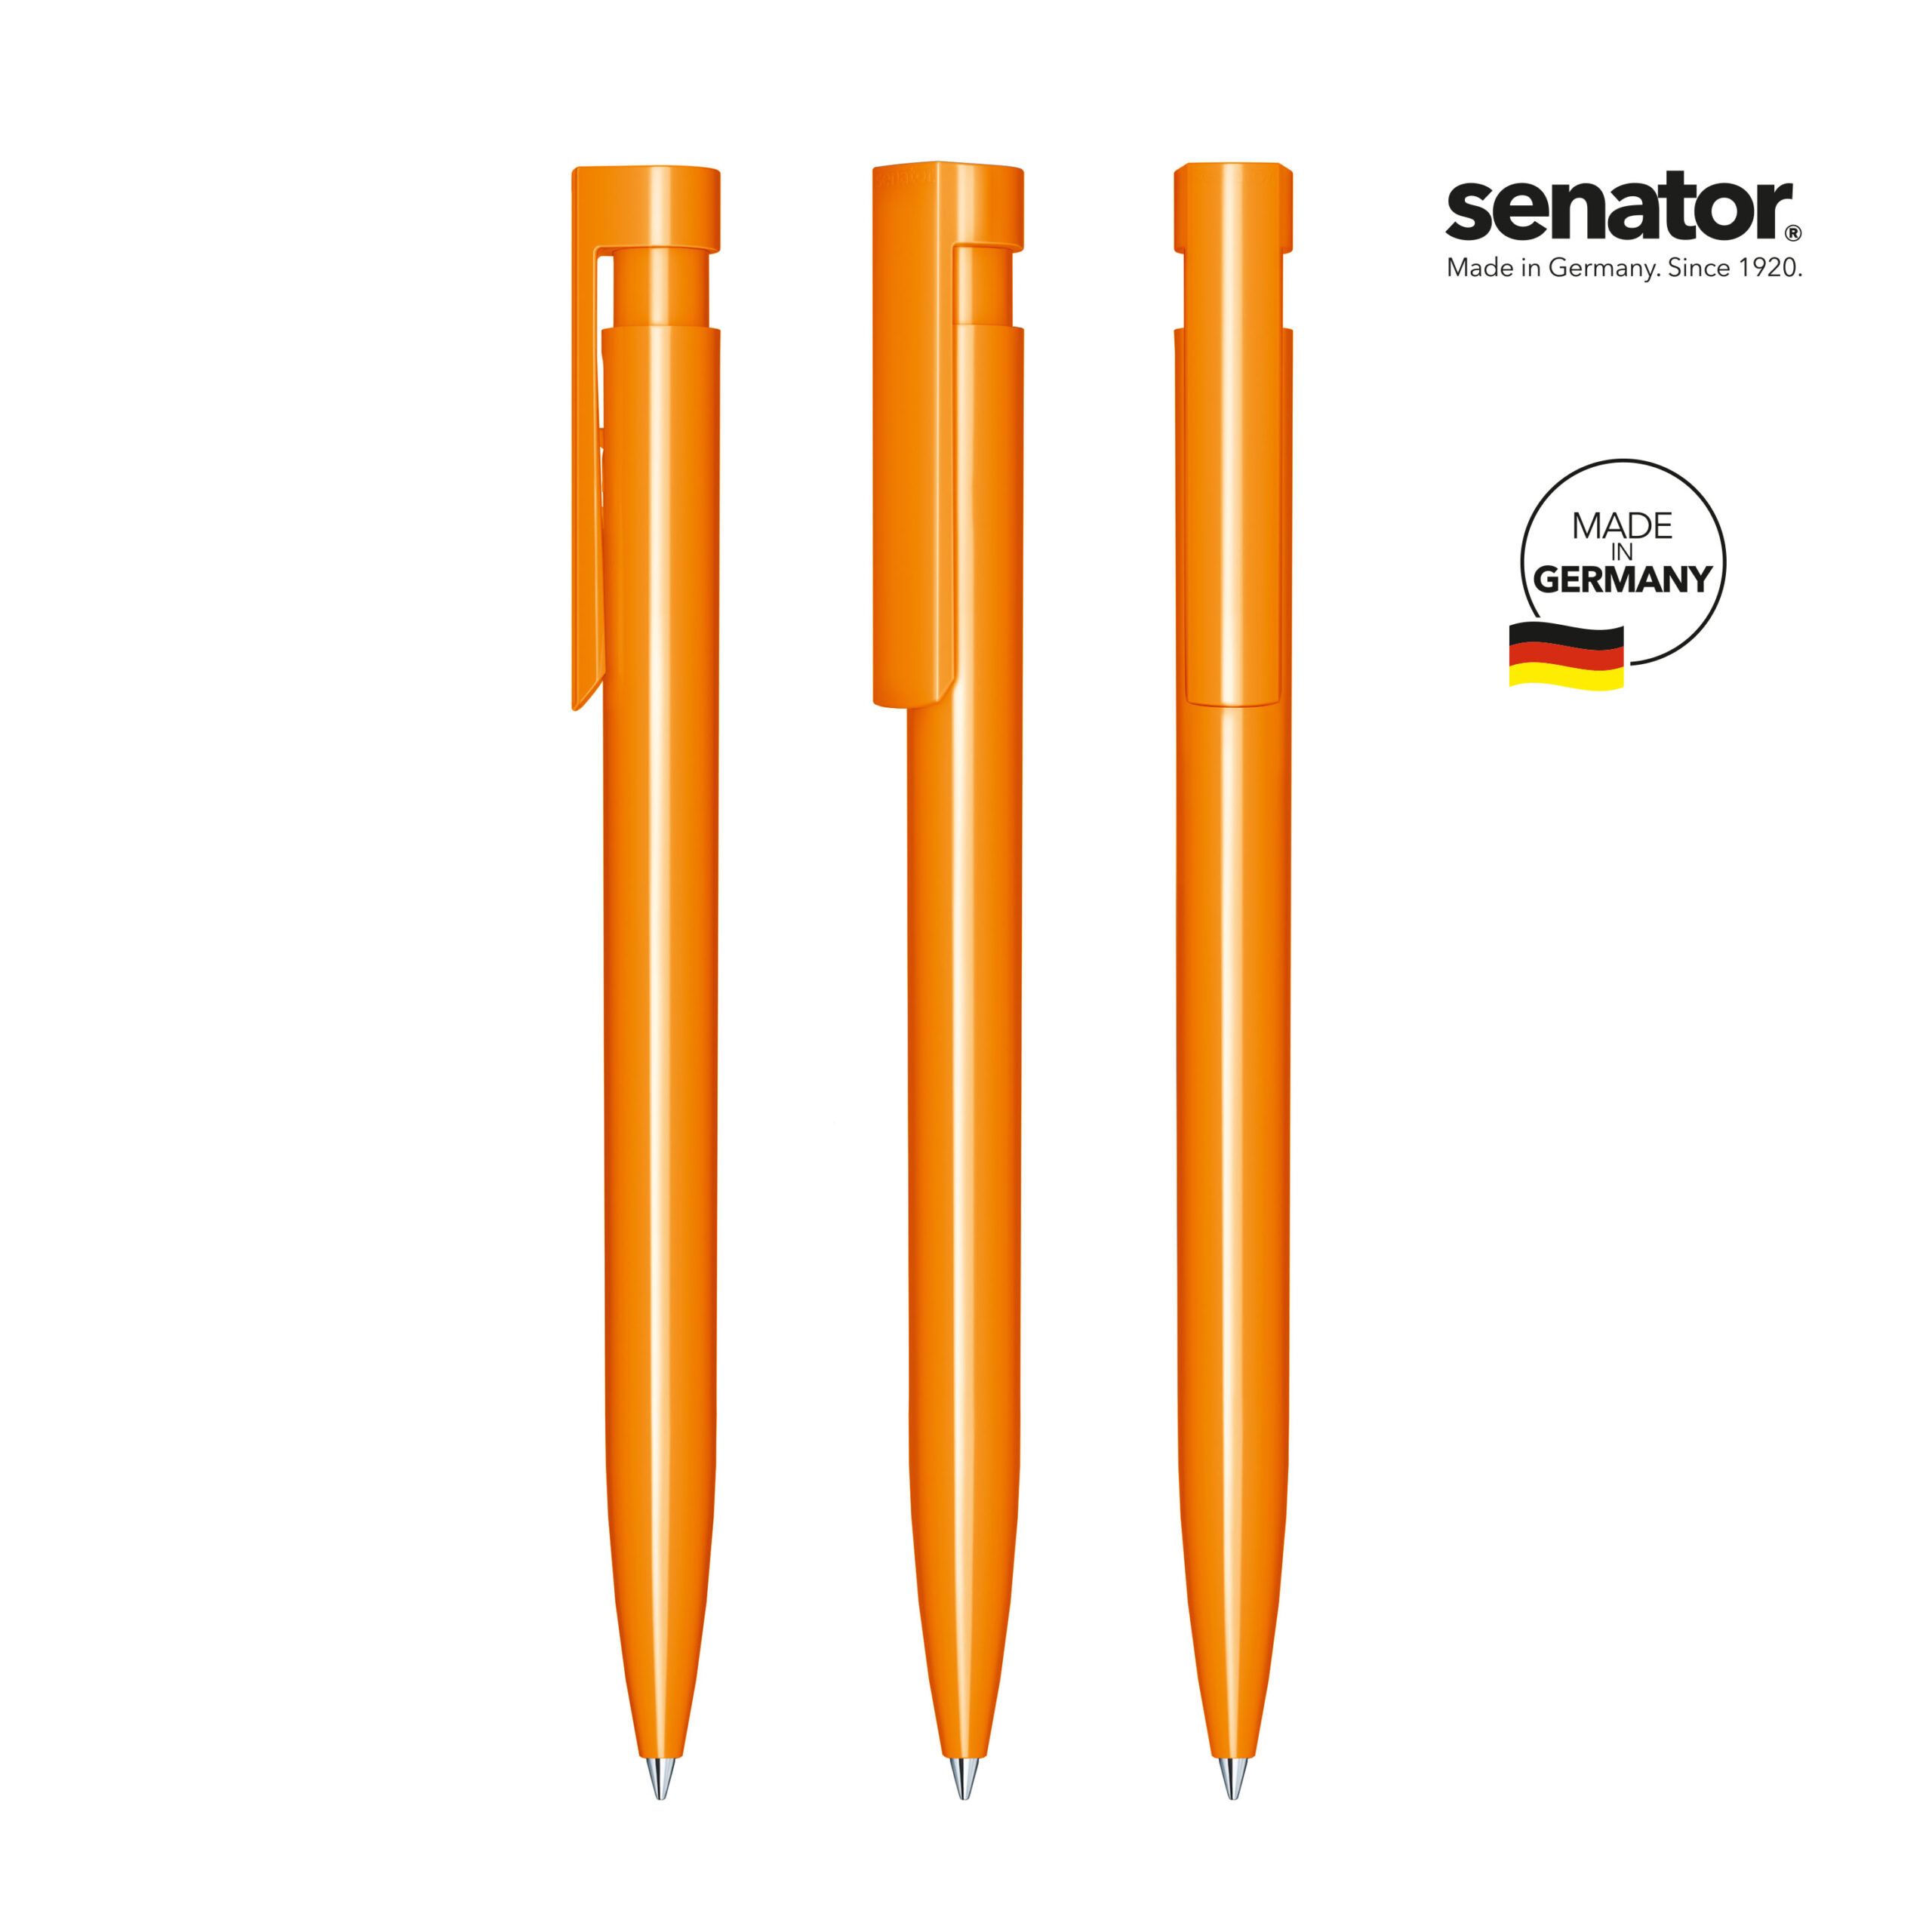 2915-senator-liberty-polished-pms-151-5-p